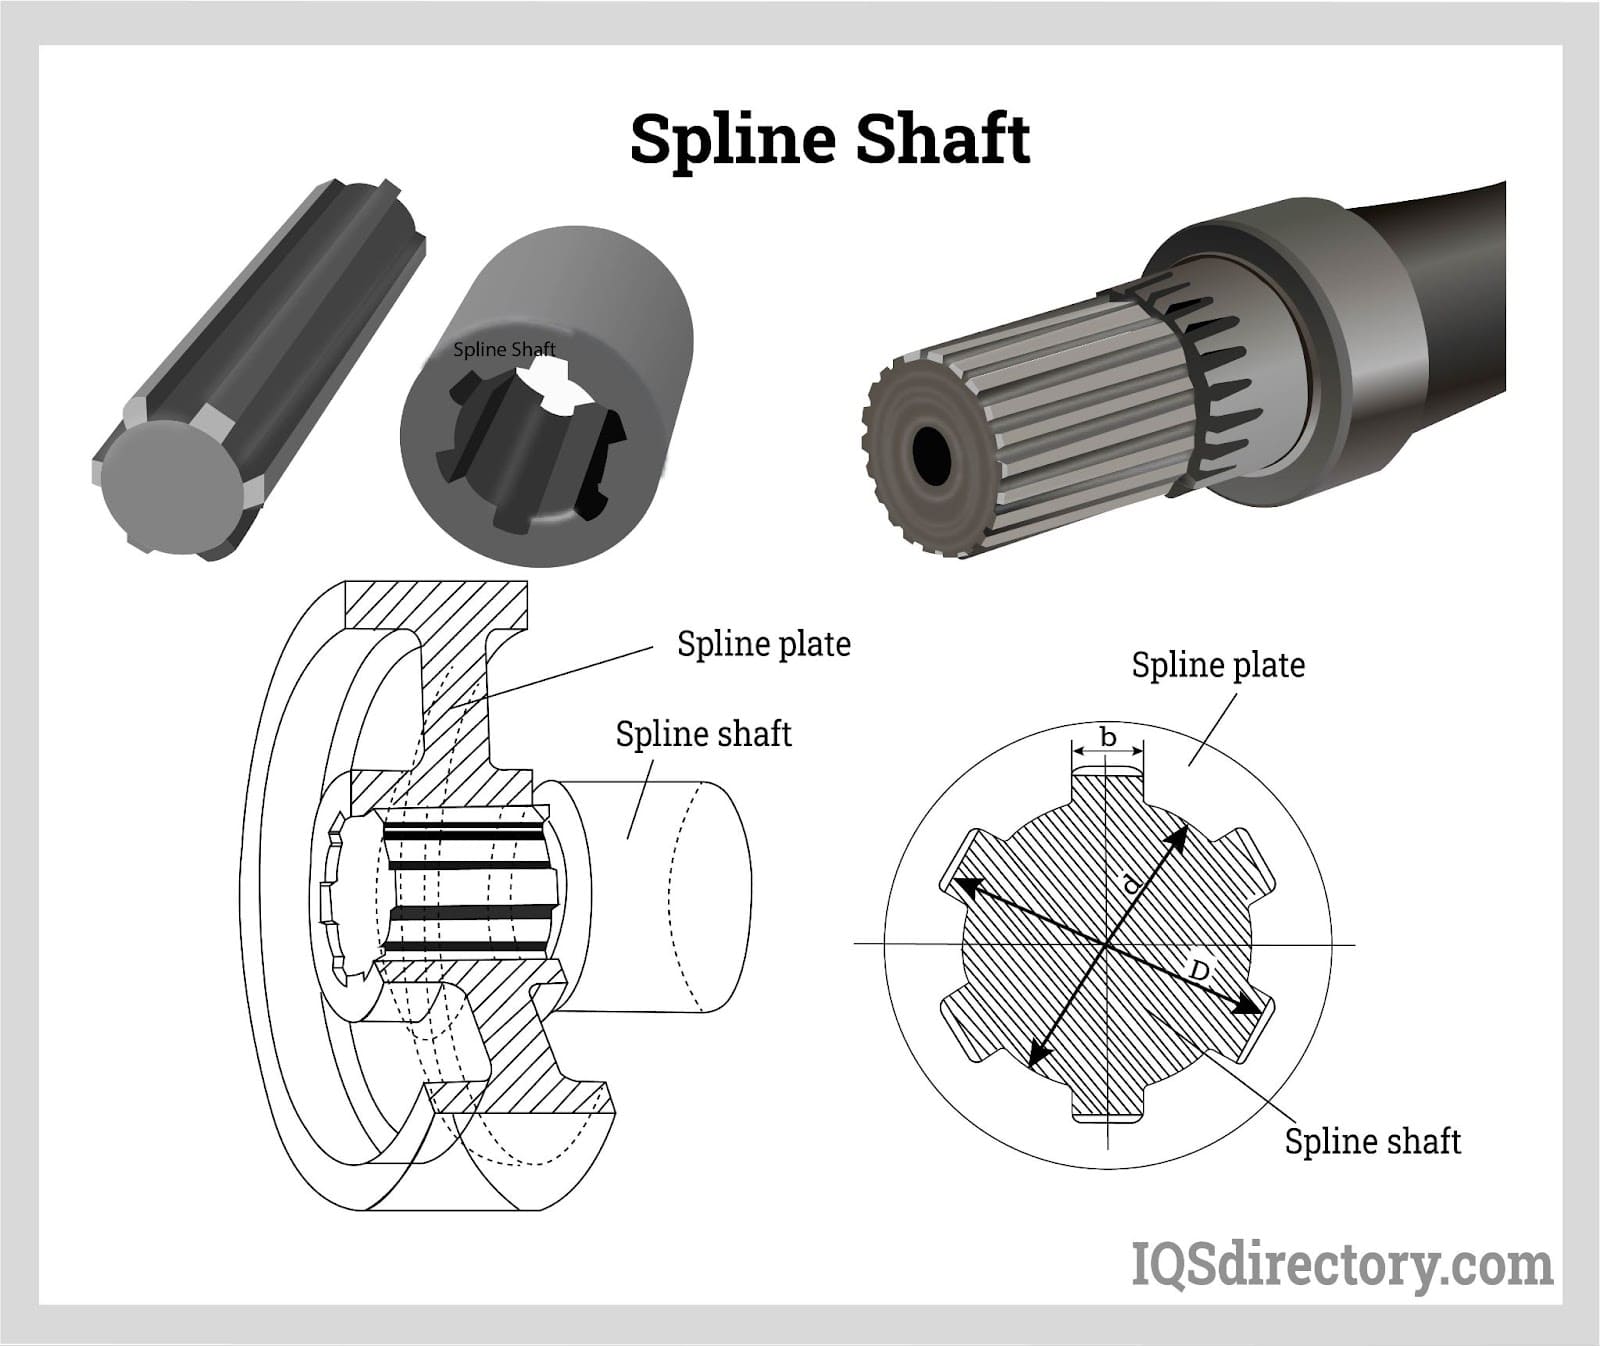 The geometric establishment of the spline shaft and the spline hole